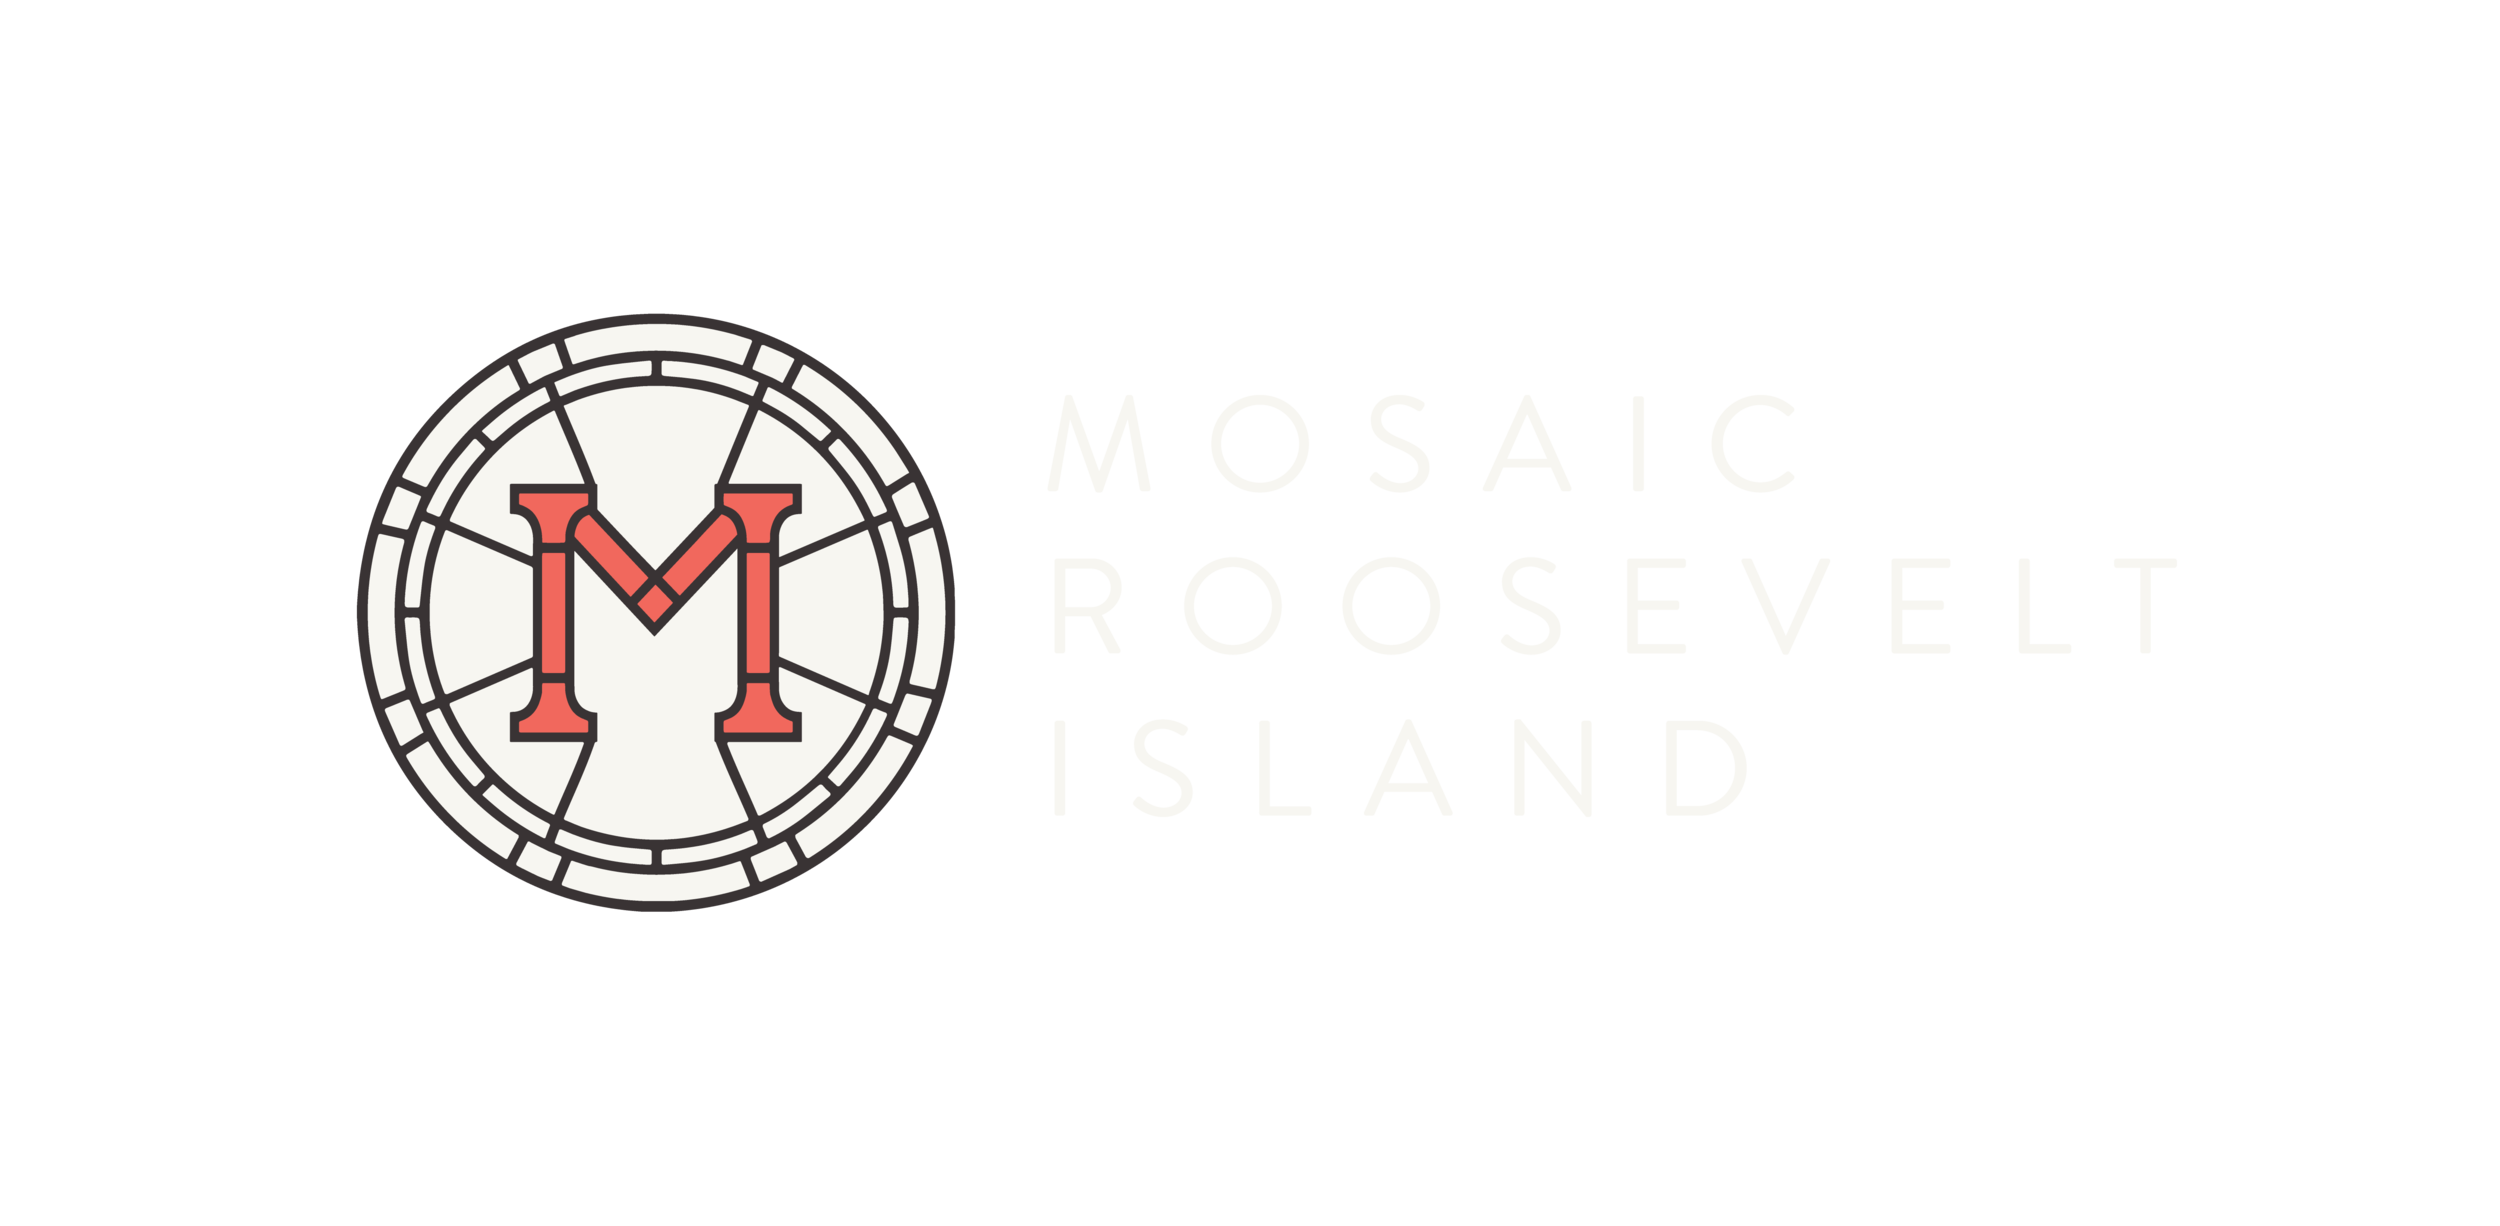 Mosaic Roosevelt Island